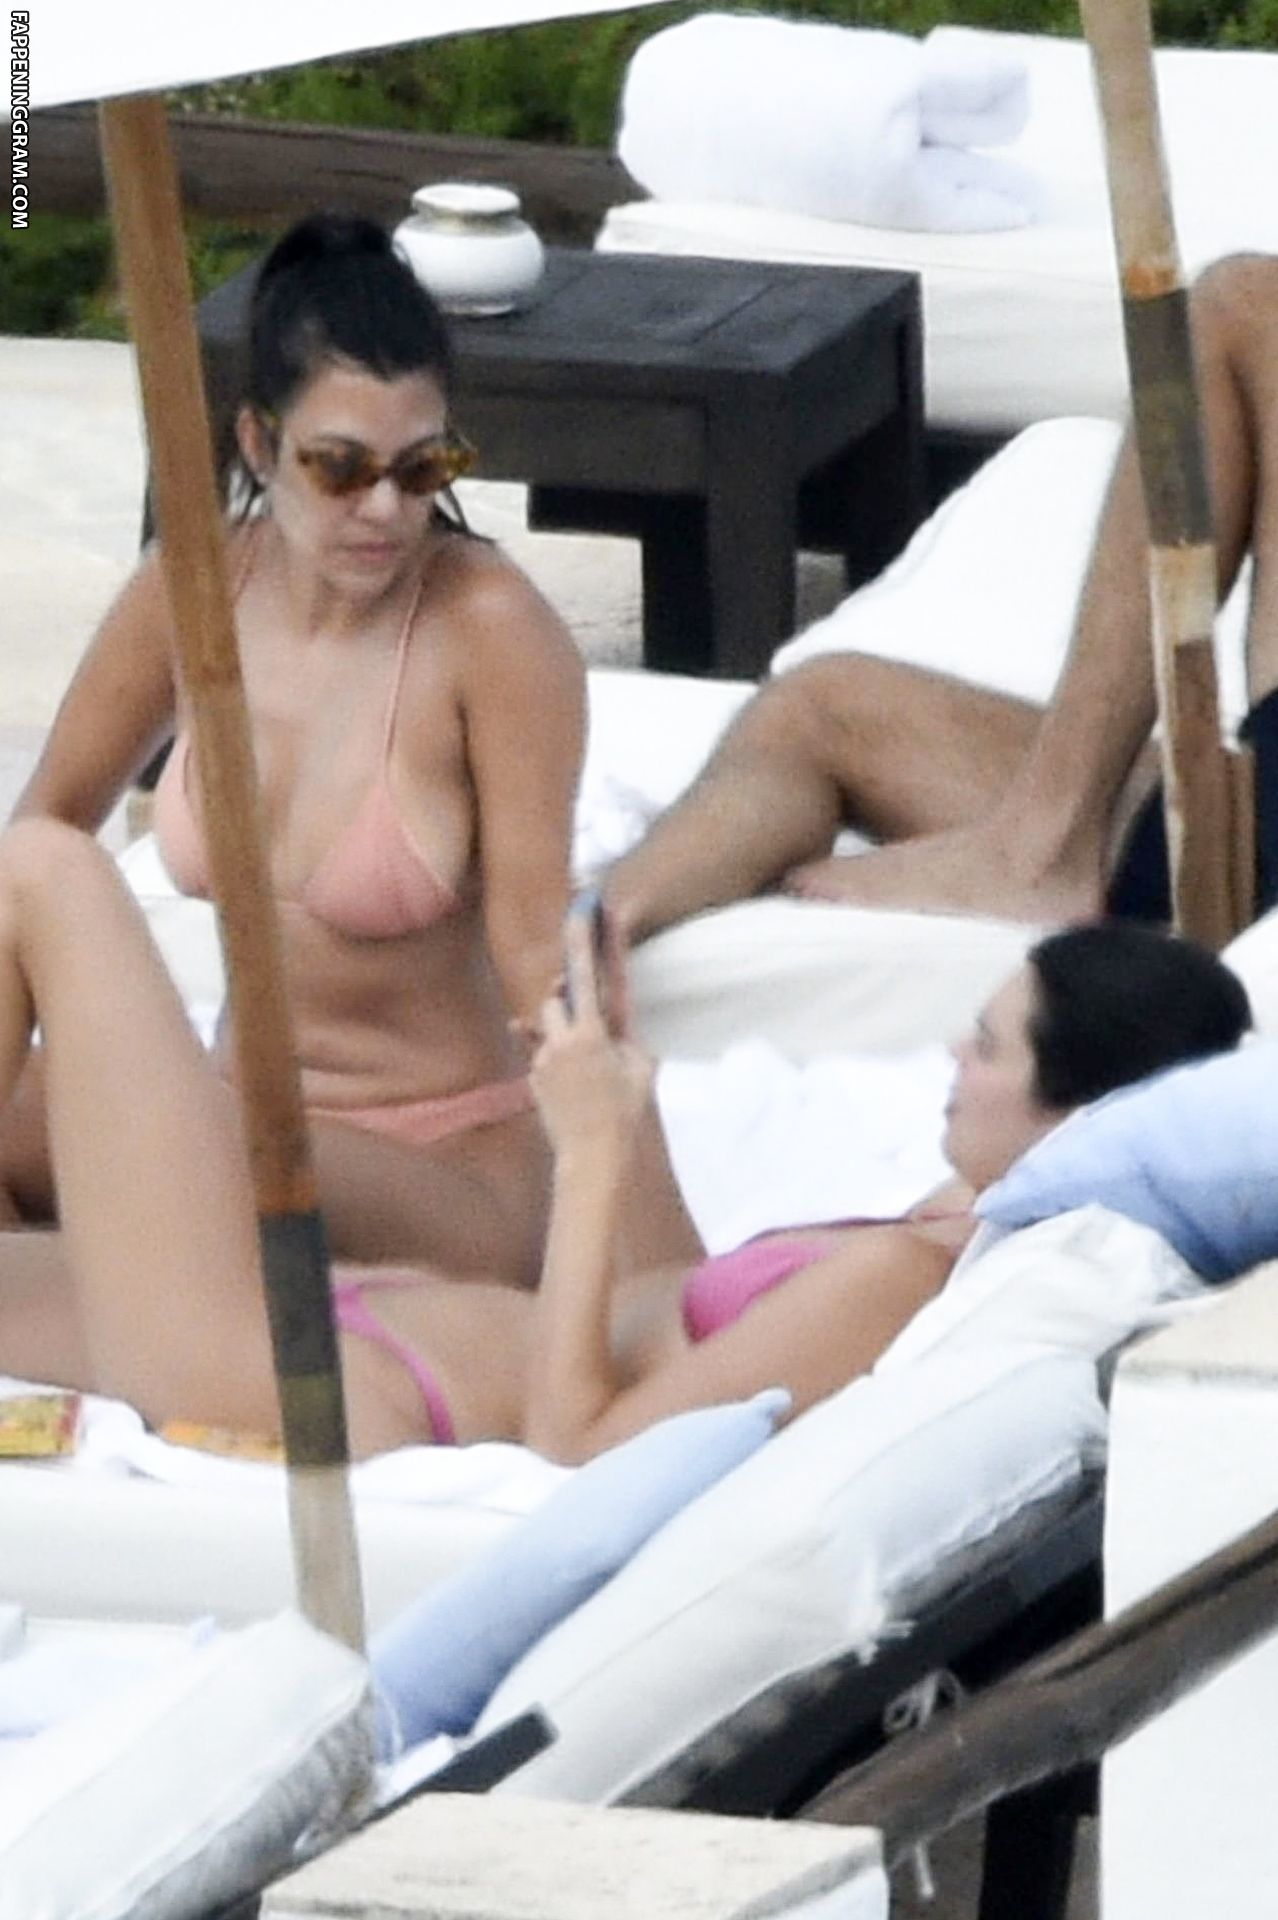 Courtney kardashian getting fucked nude